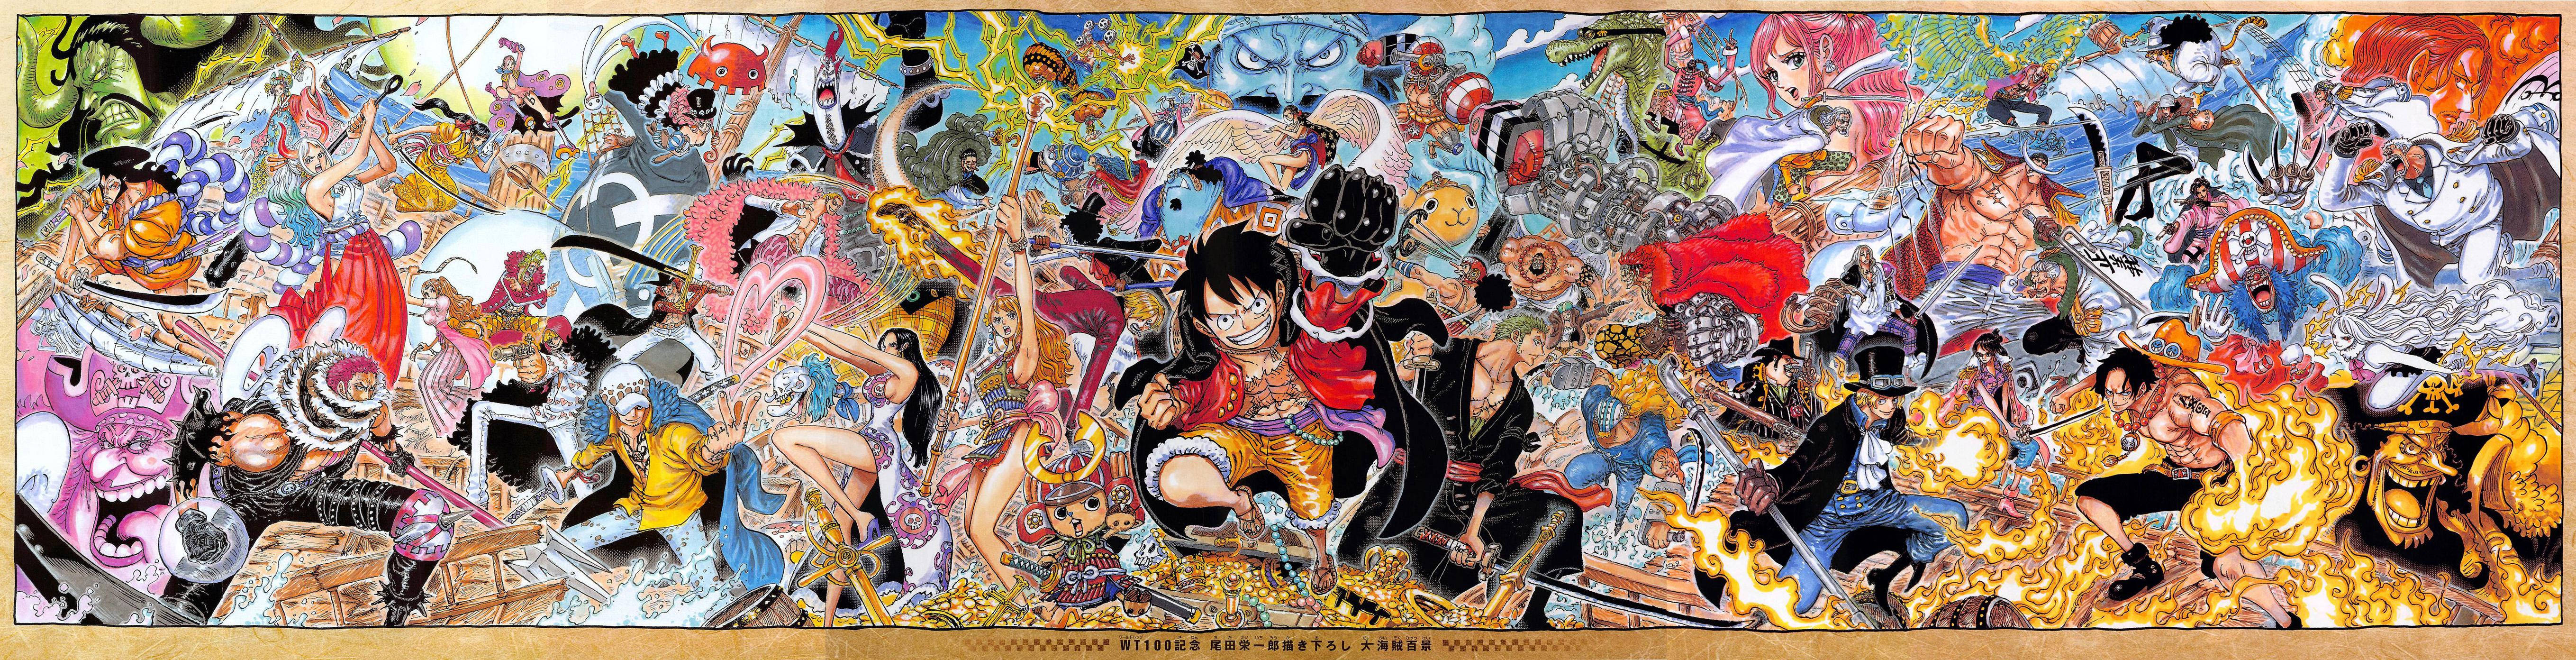 Enone Piece Pfp Anime Series Poster Wallpaper